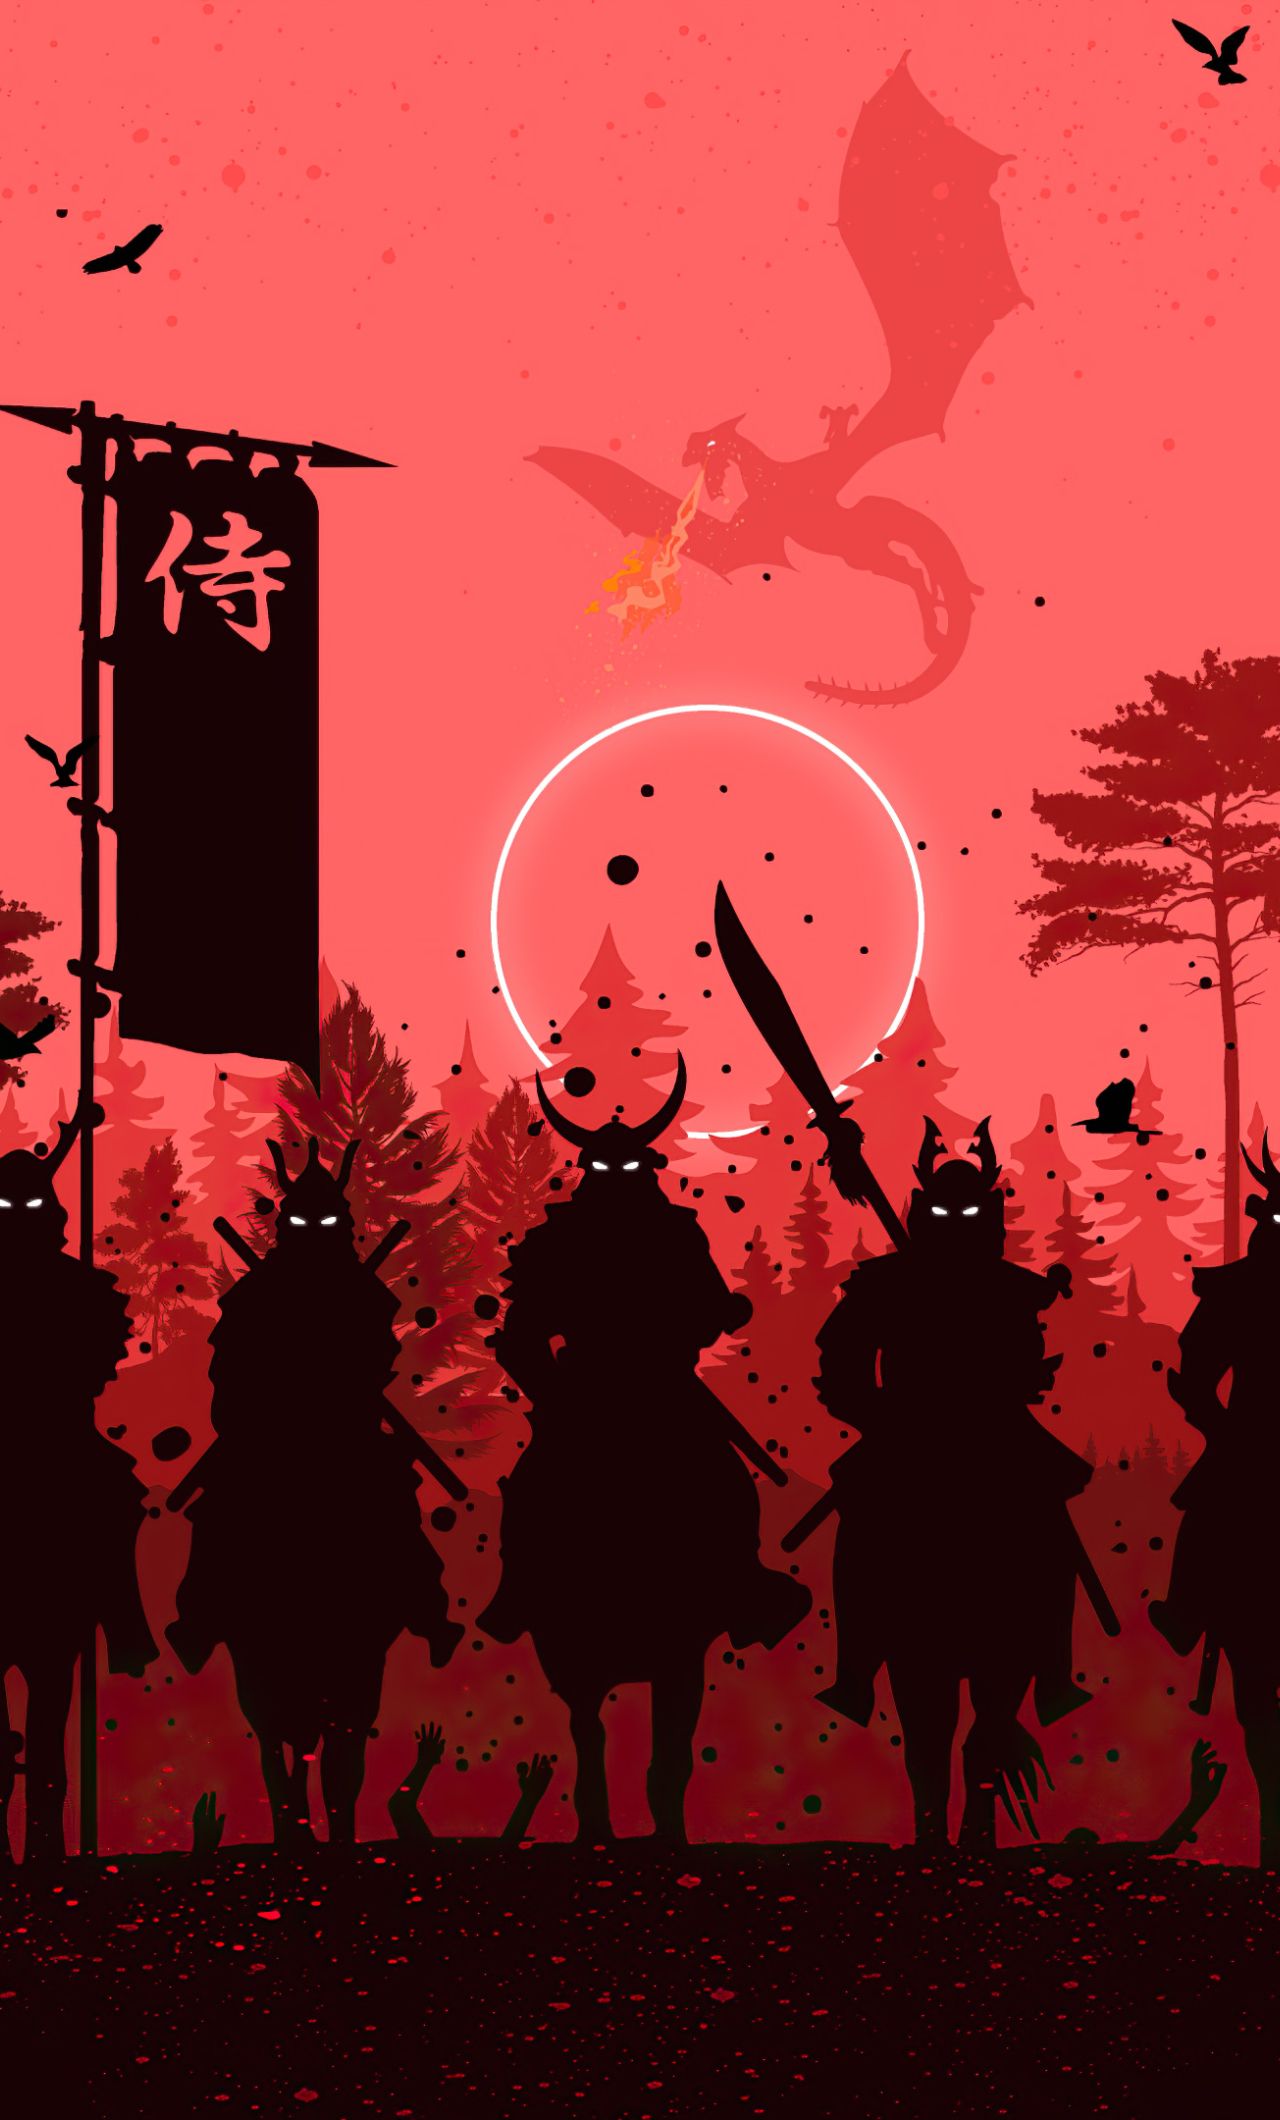 A samurai wallpaper with a red and black color scheme - Samurai